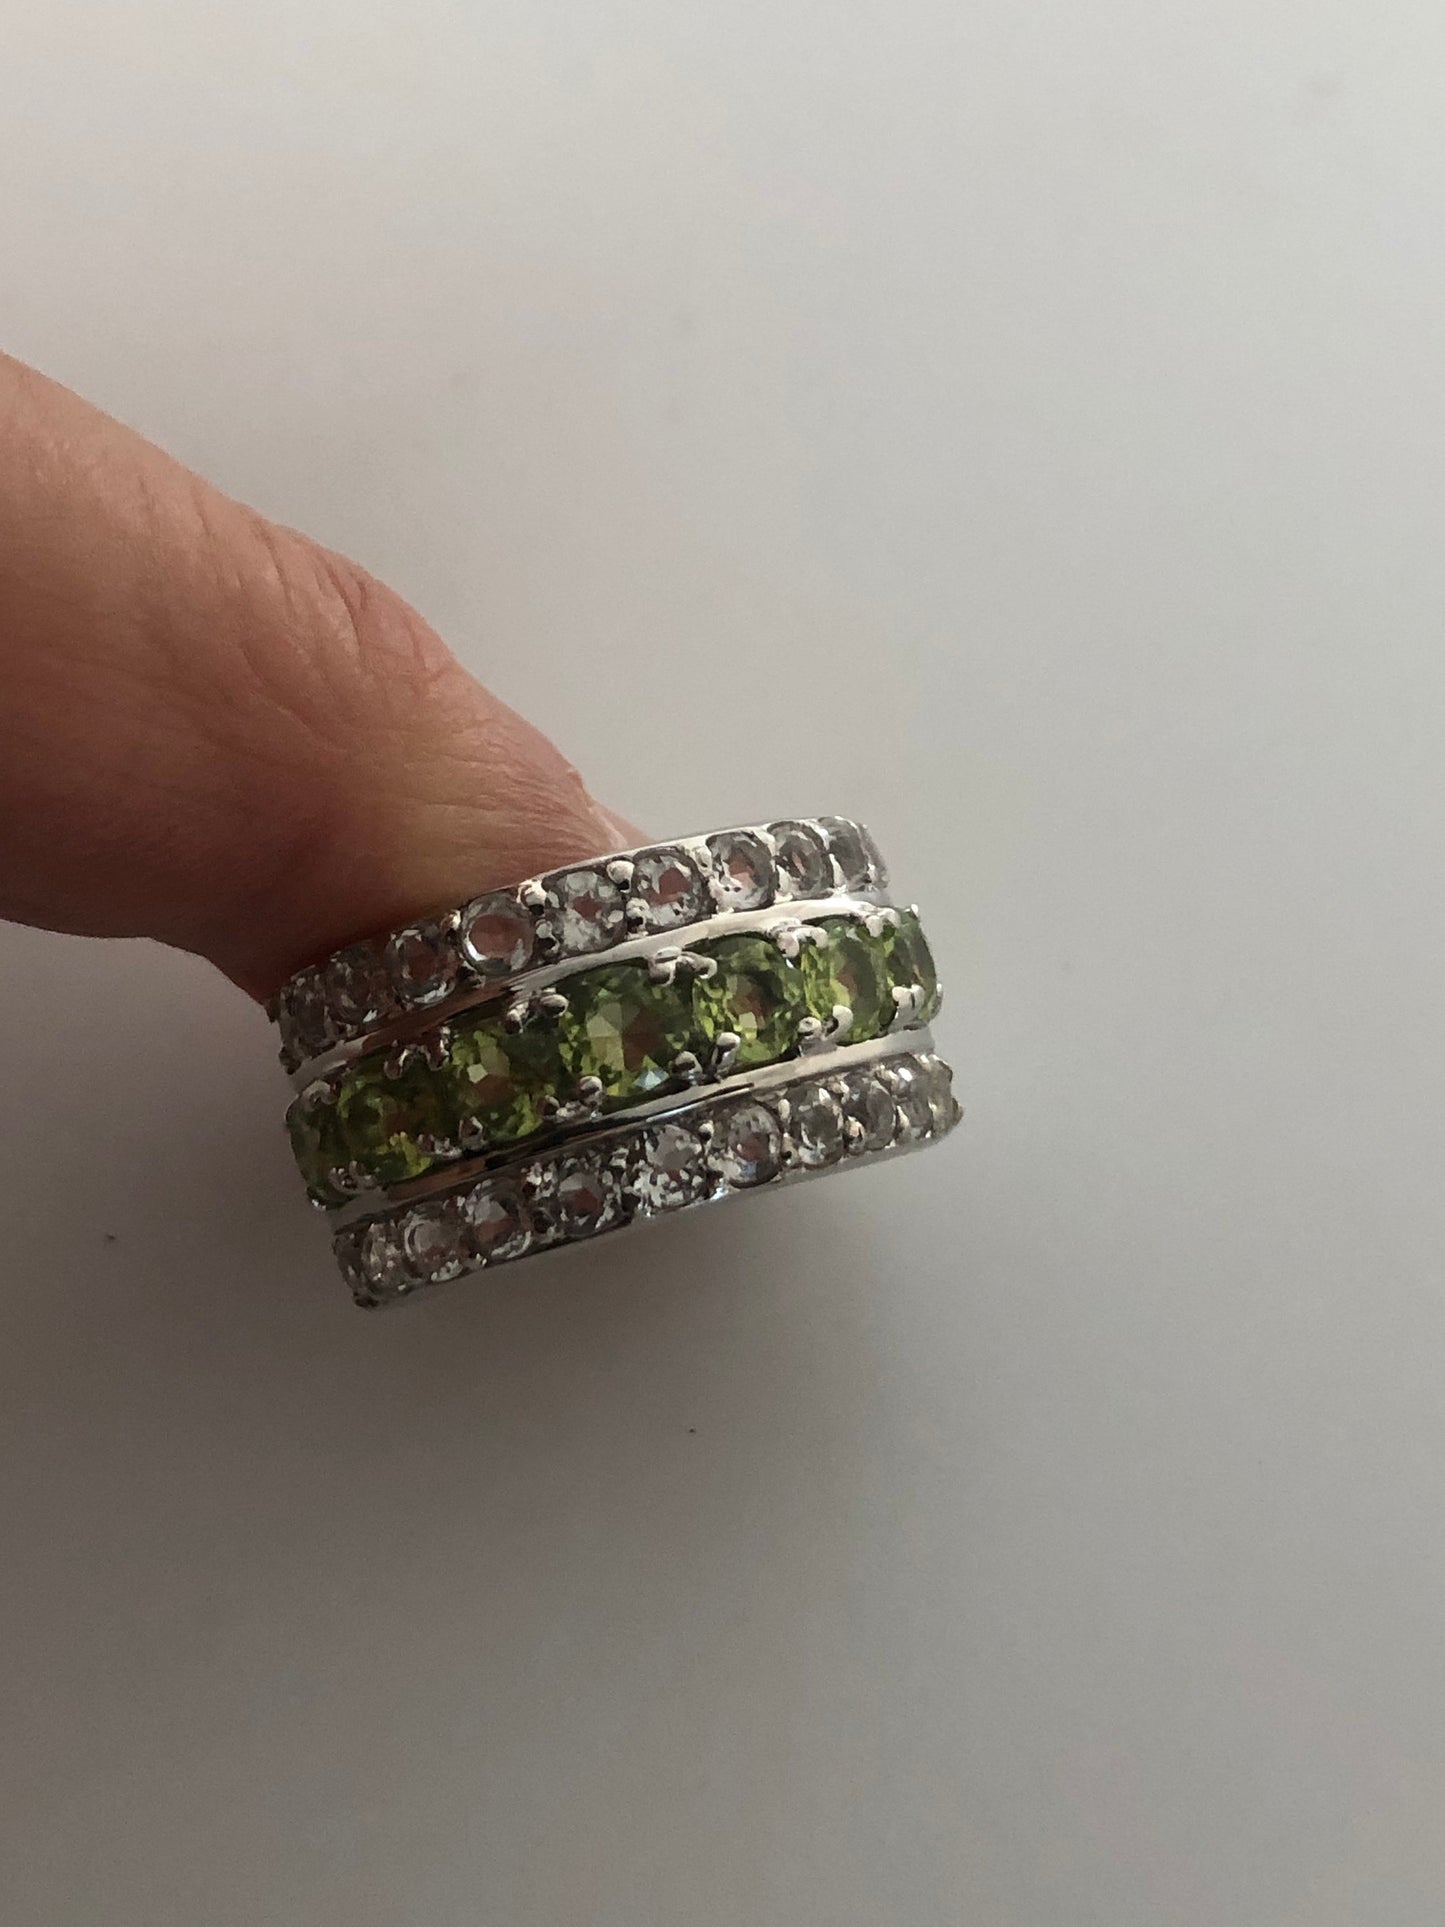 Vintage Handmade Genuine Green Peridot 925 Sterling Silver Ring SIze 8